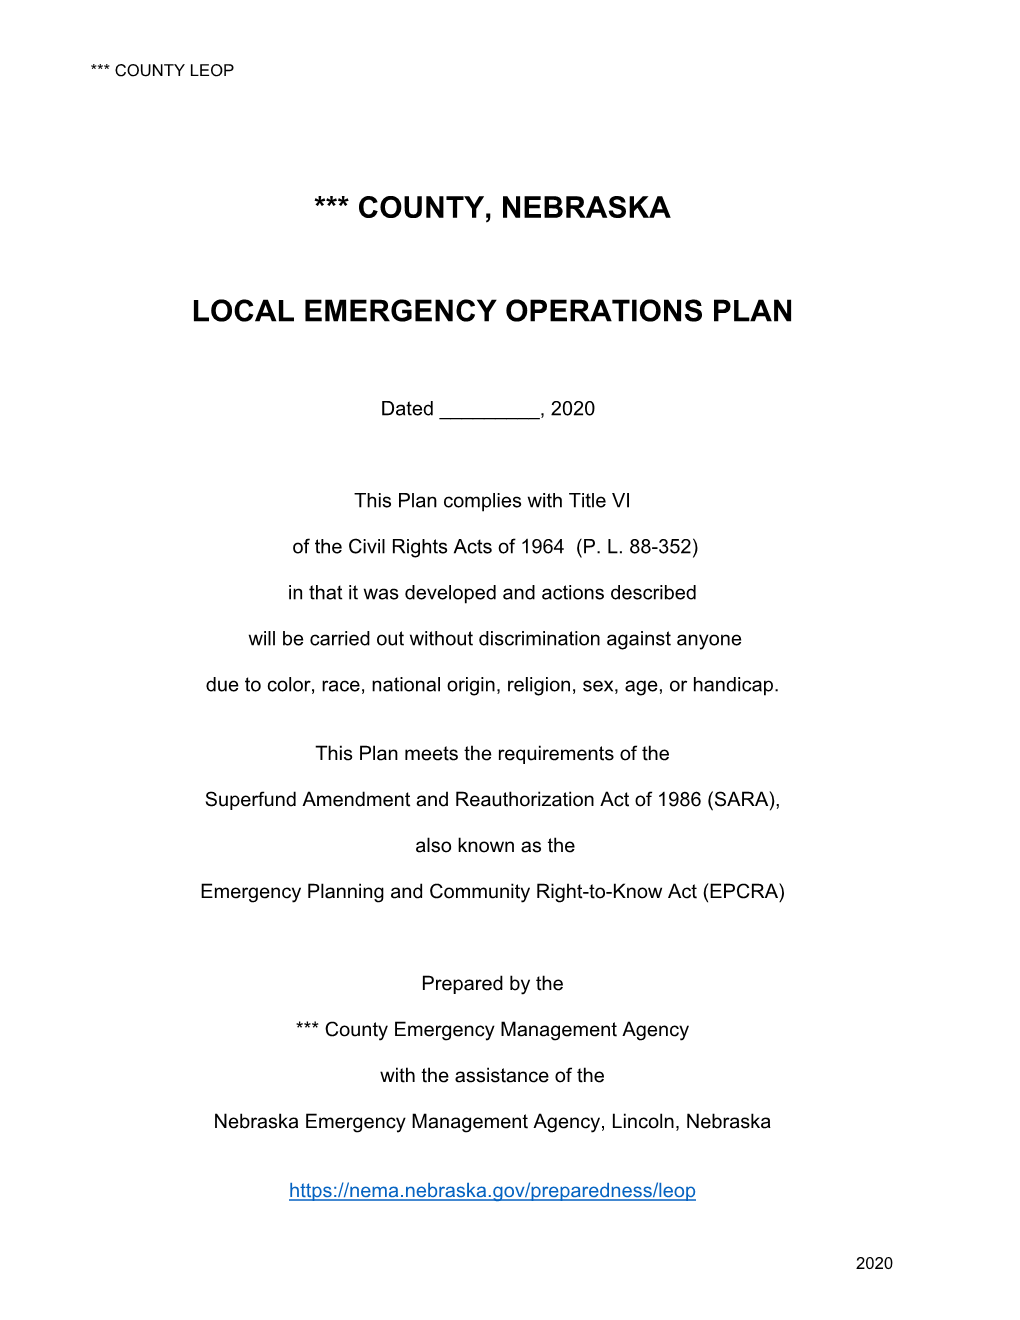 *** County, Nebraska Local Emergency Operations Plan